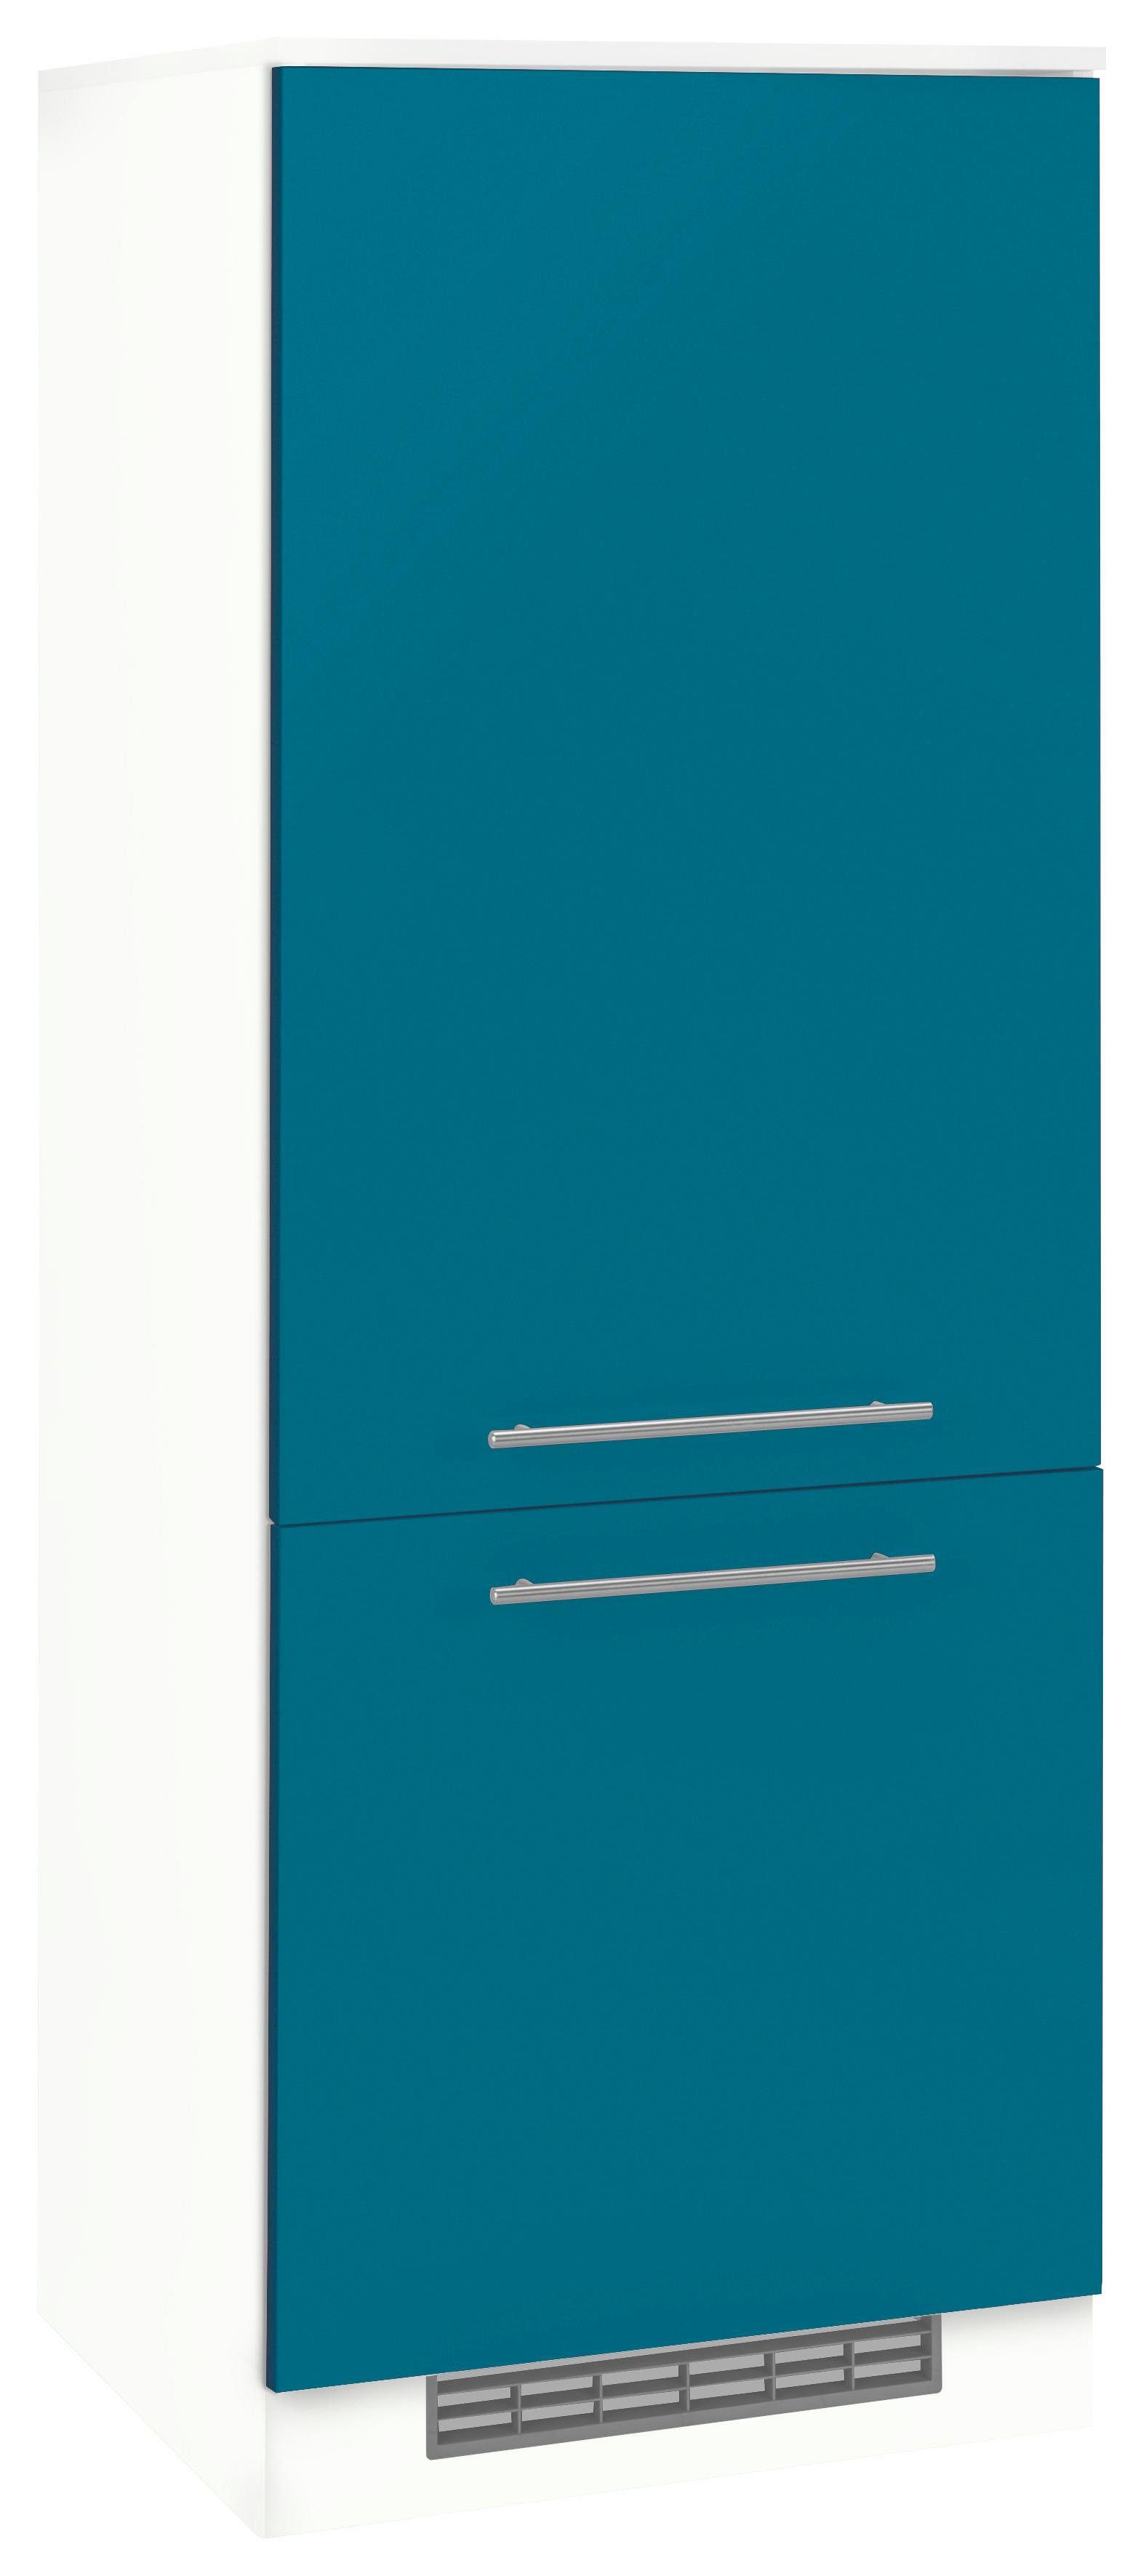 Küchen Kühlumbauschrank Flexi2 ozeanblau/weiß wiho